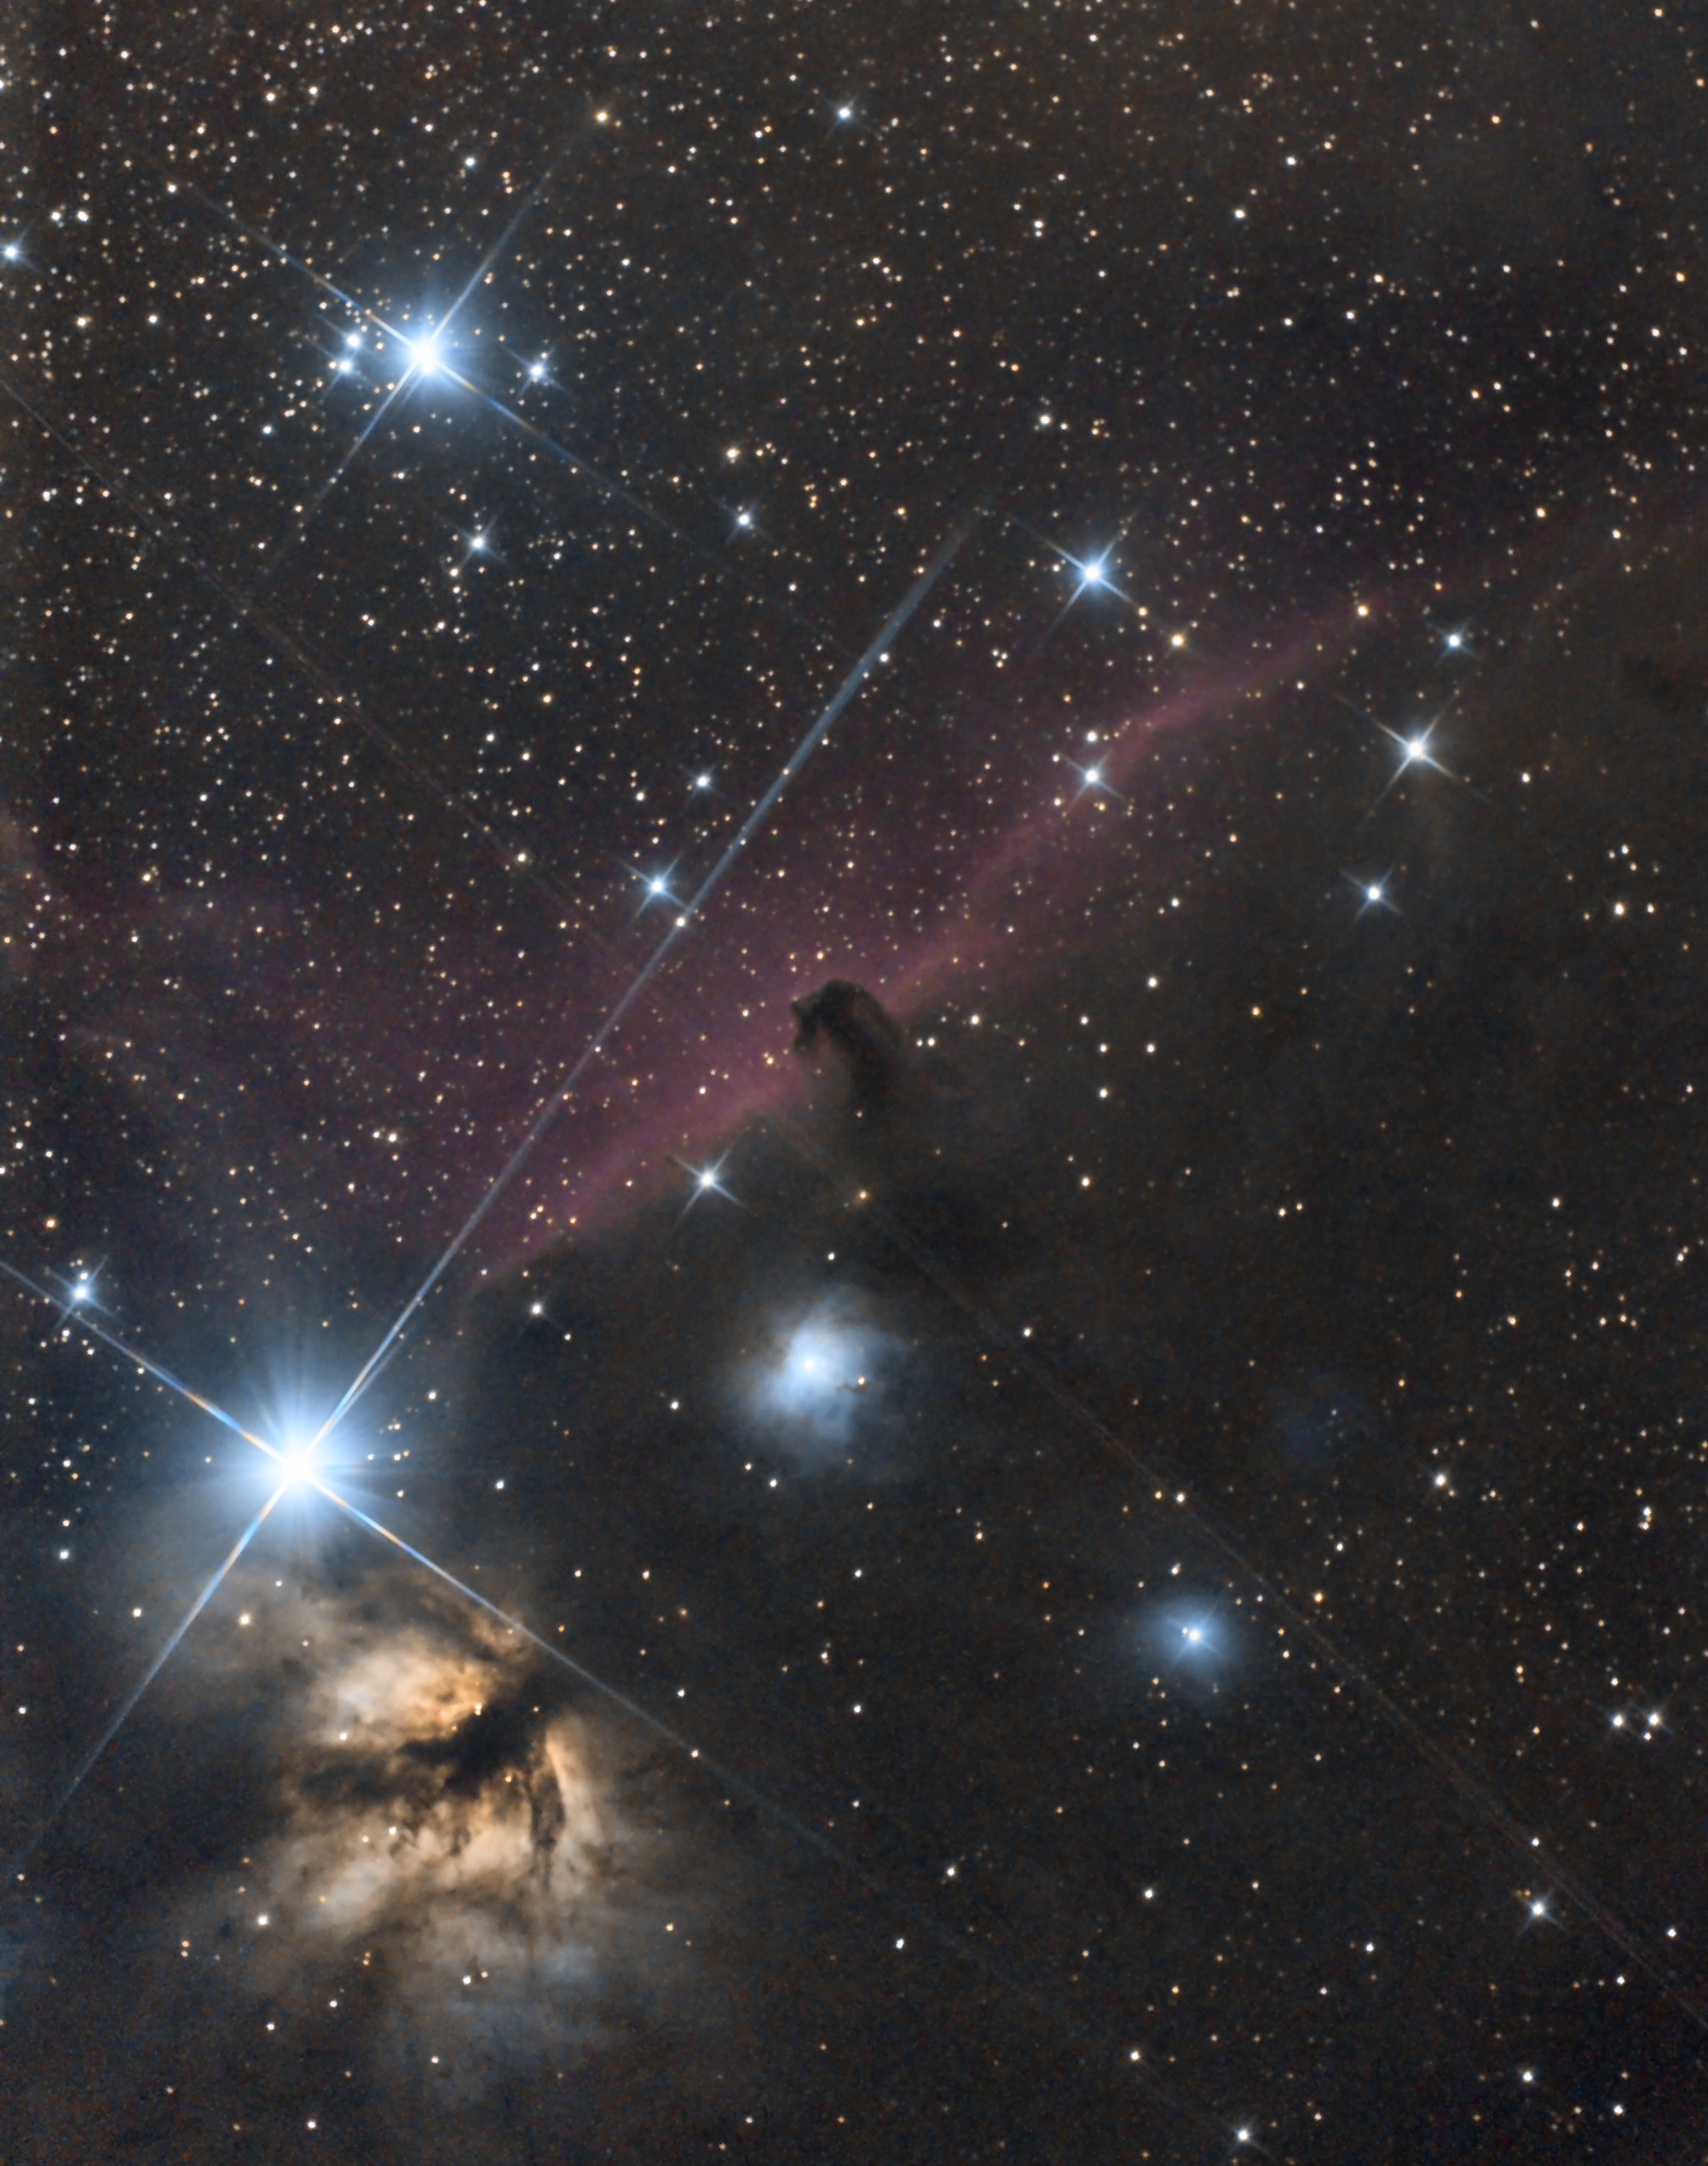 HorseHead Nebula